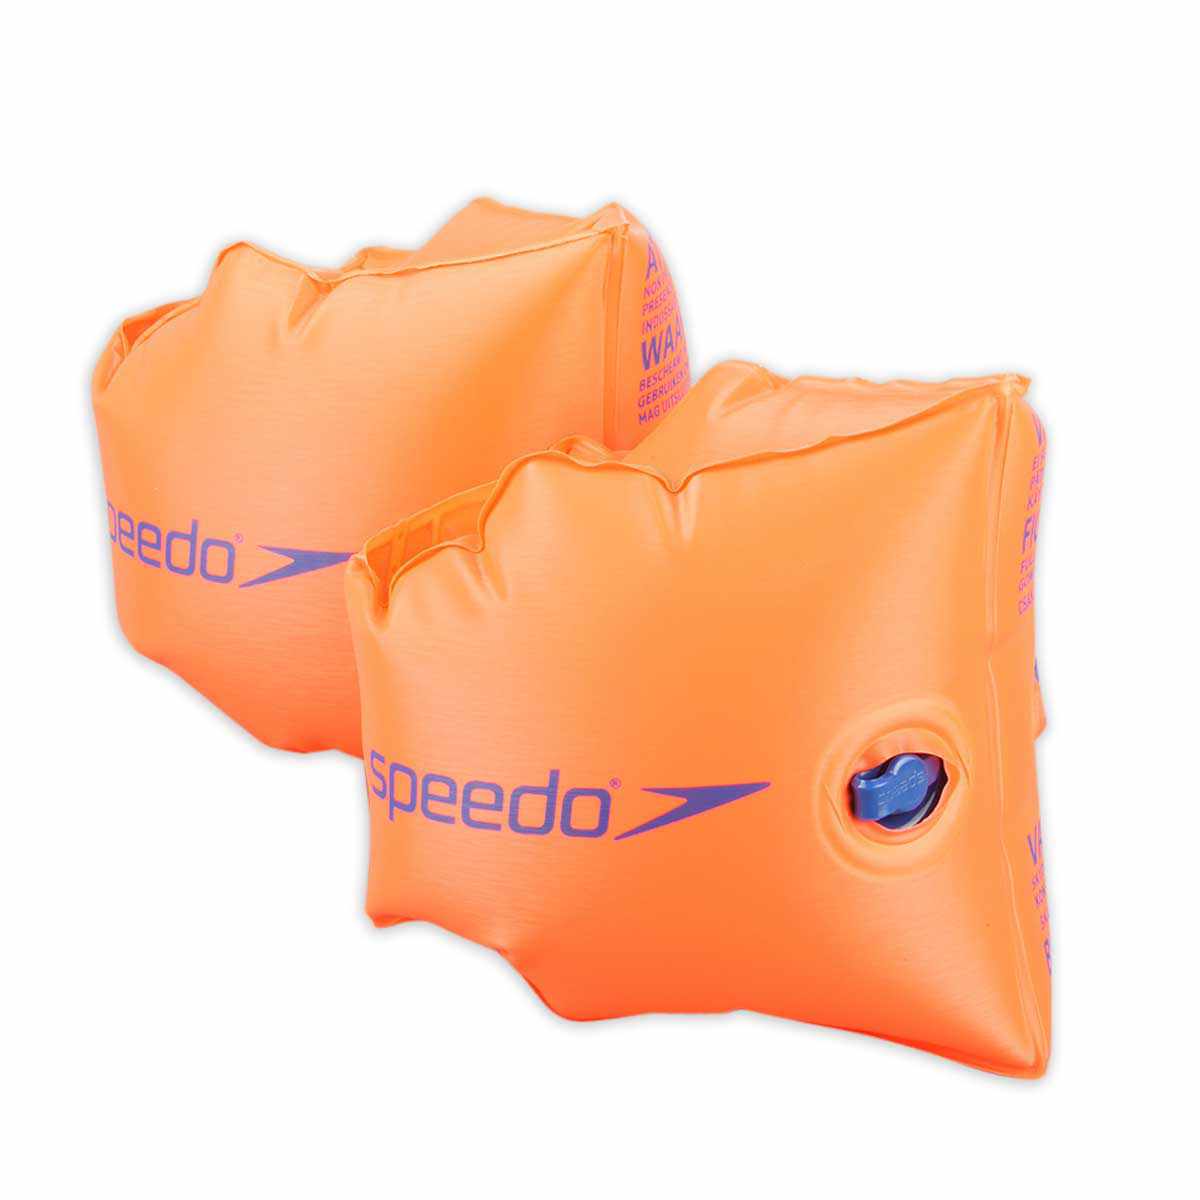 Speedo Armbands - Orange